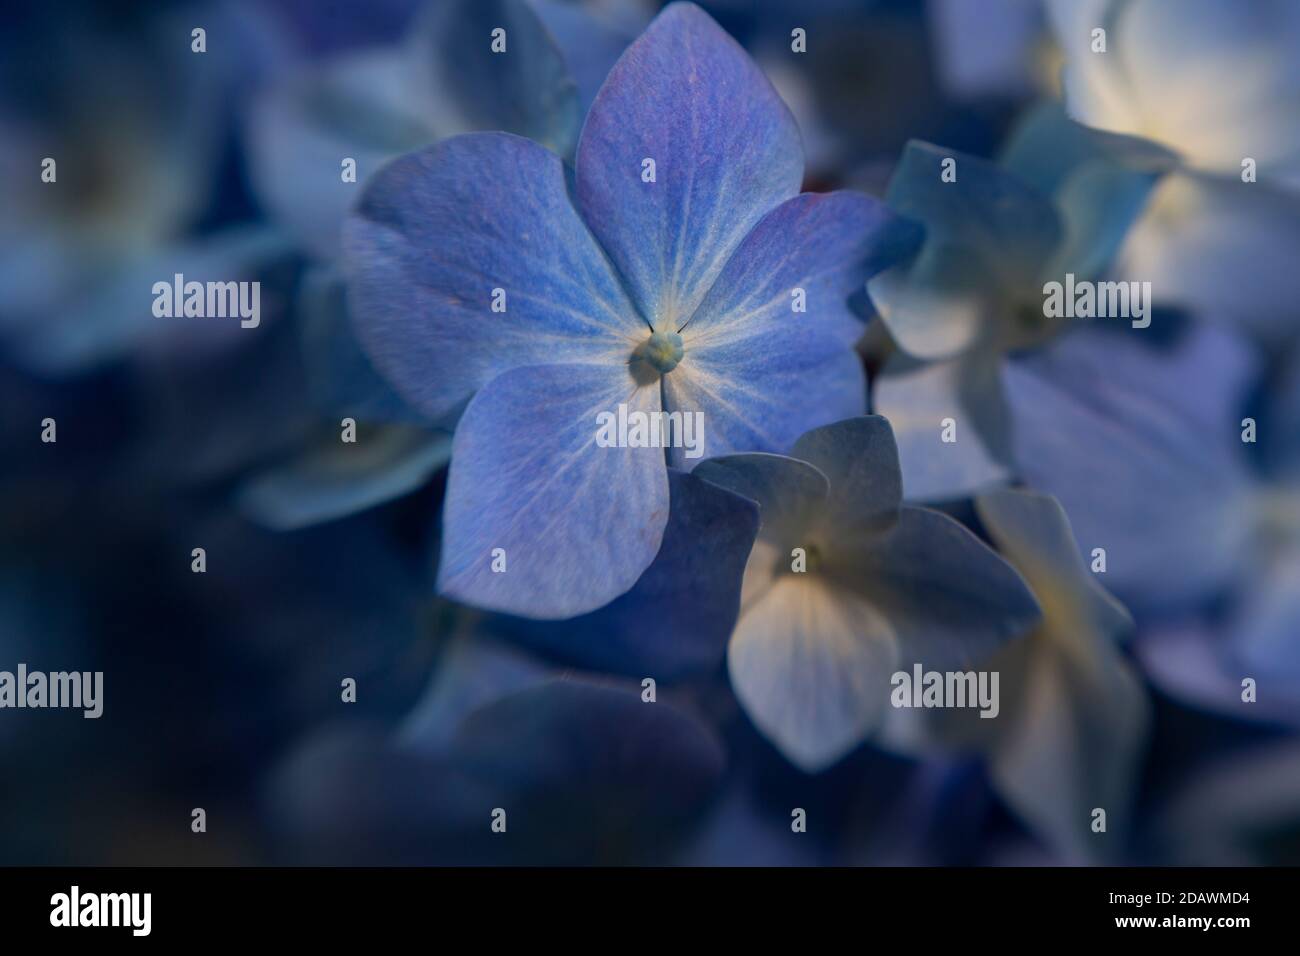 WA18094-00...WASHINGTON - Flowerlets of a blue hydrangea. Stock Photo